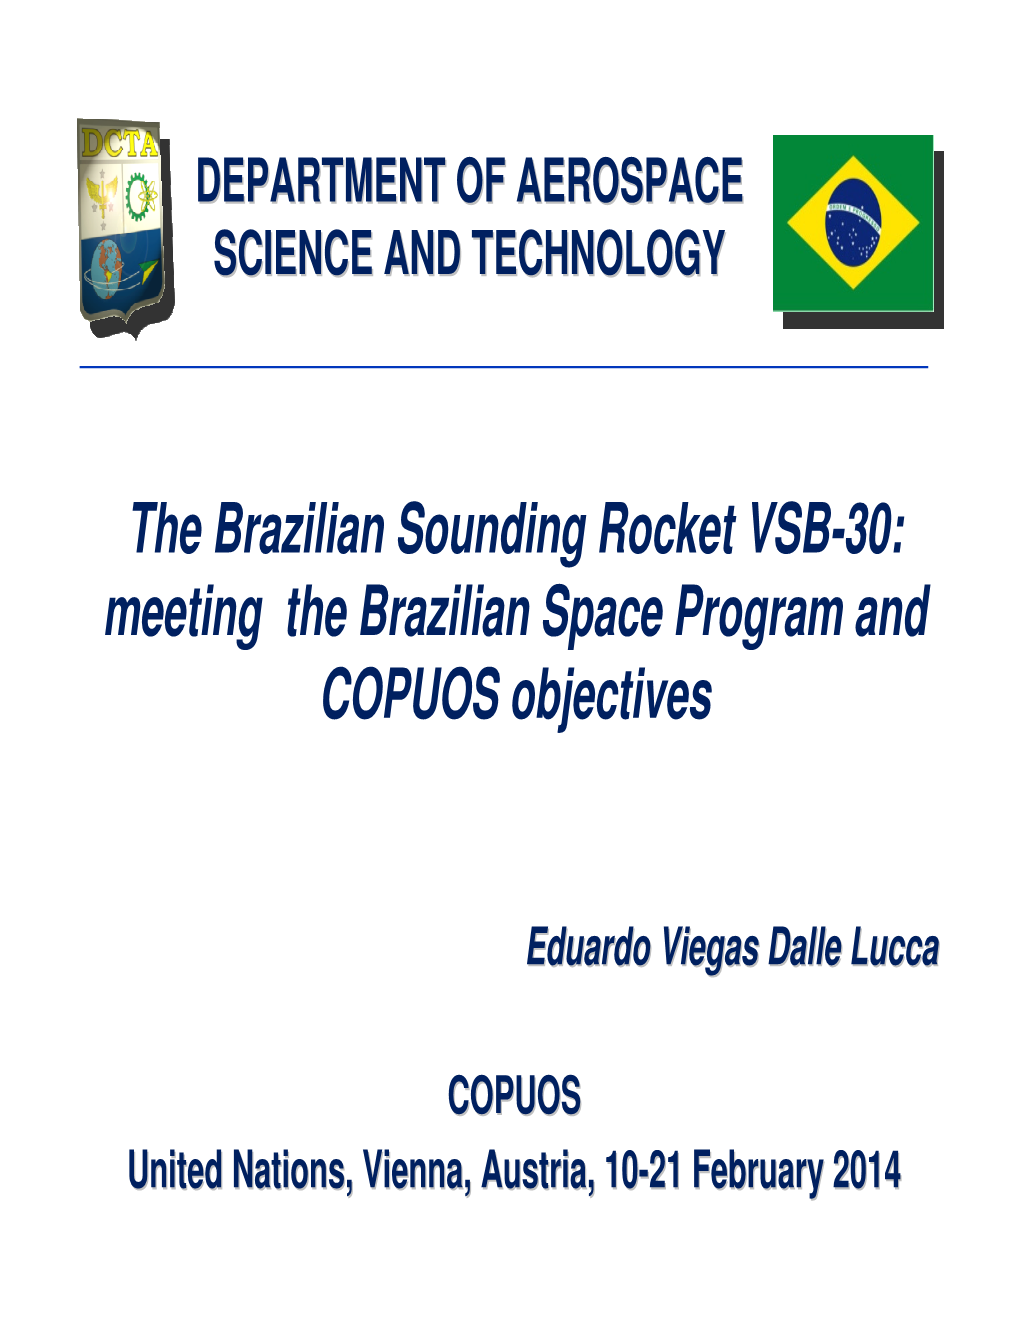 The Brazilian Sounding Rocket VSB-30: Meeting the Brazilian Space Program and COPUOS Objectives